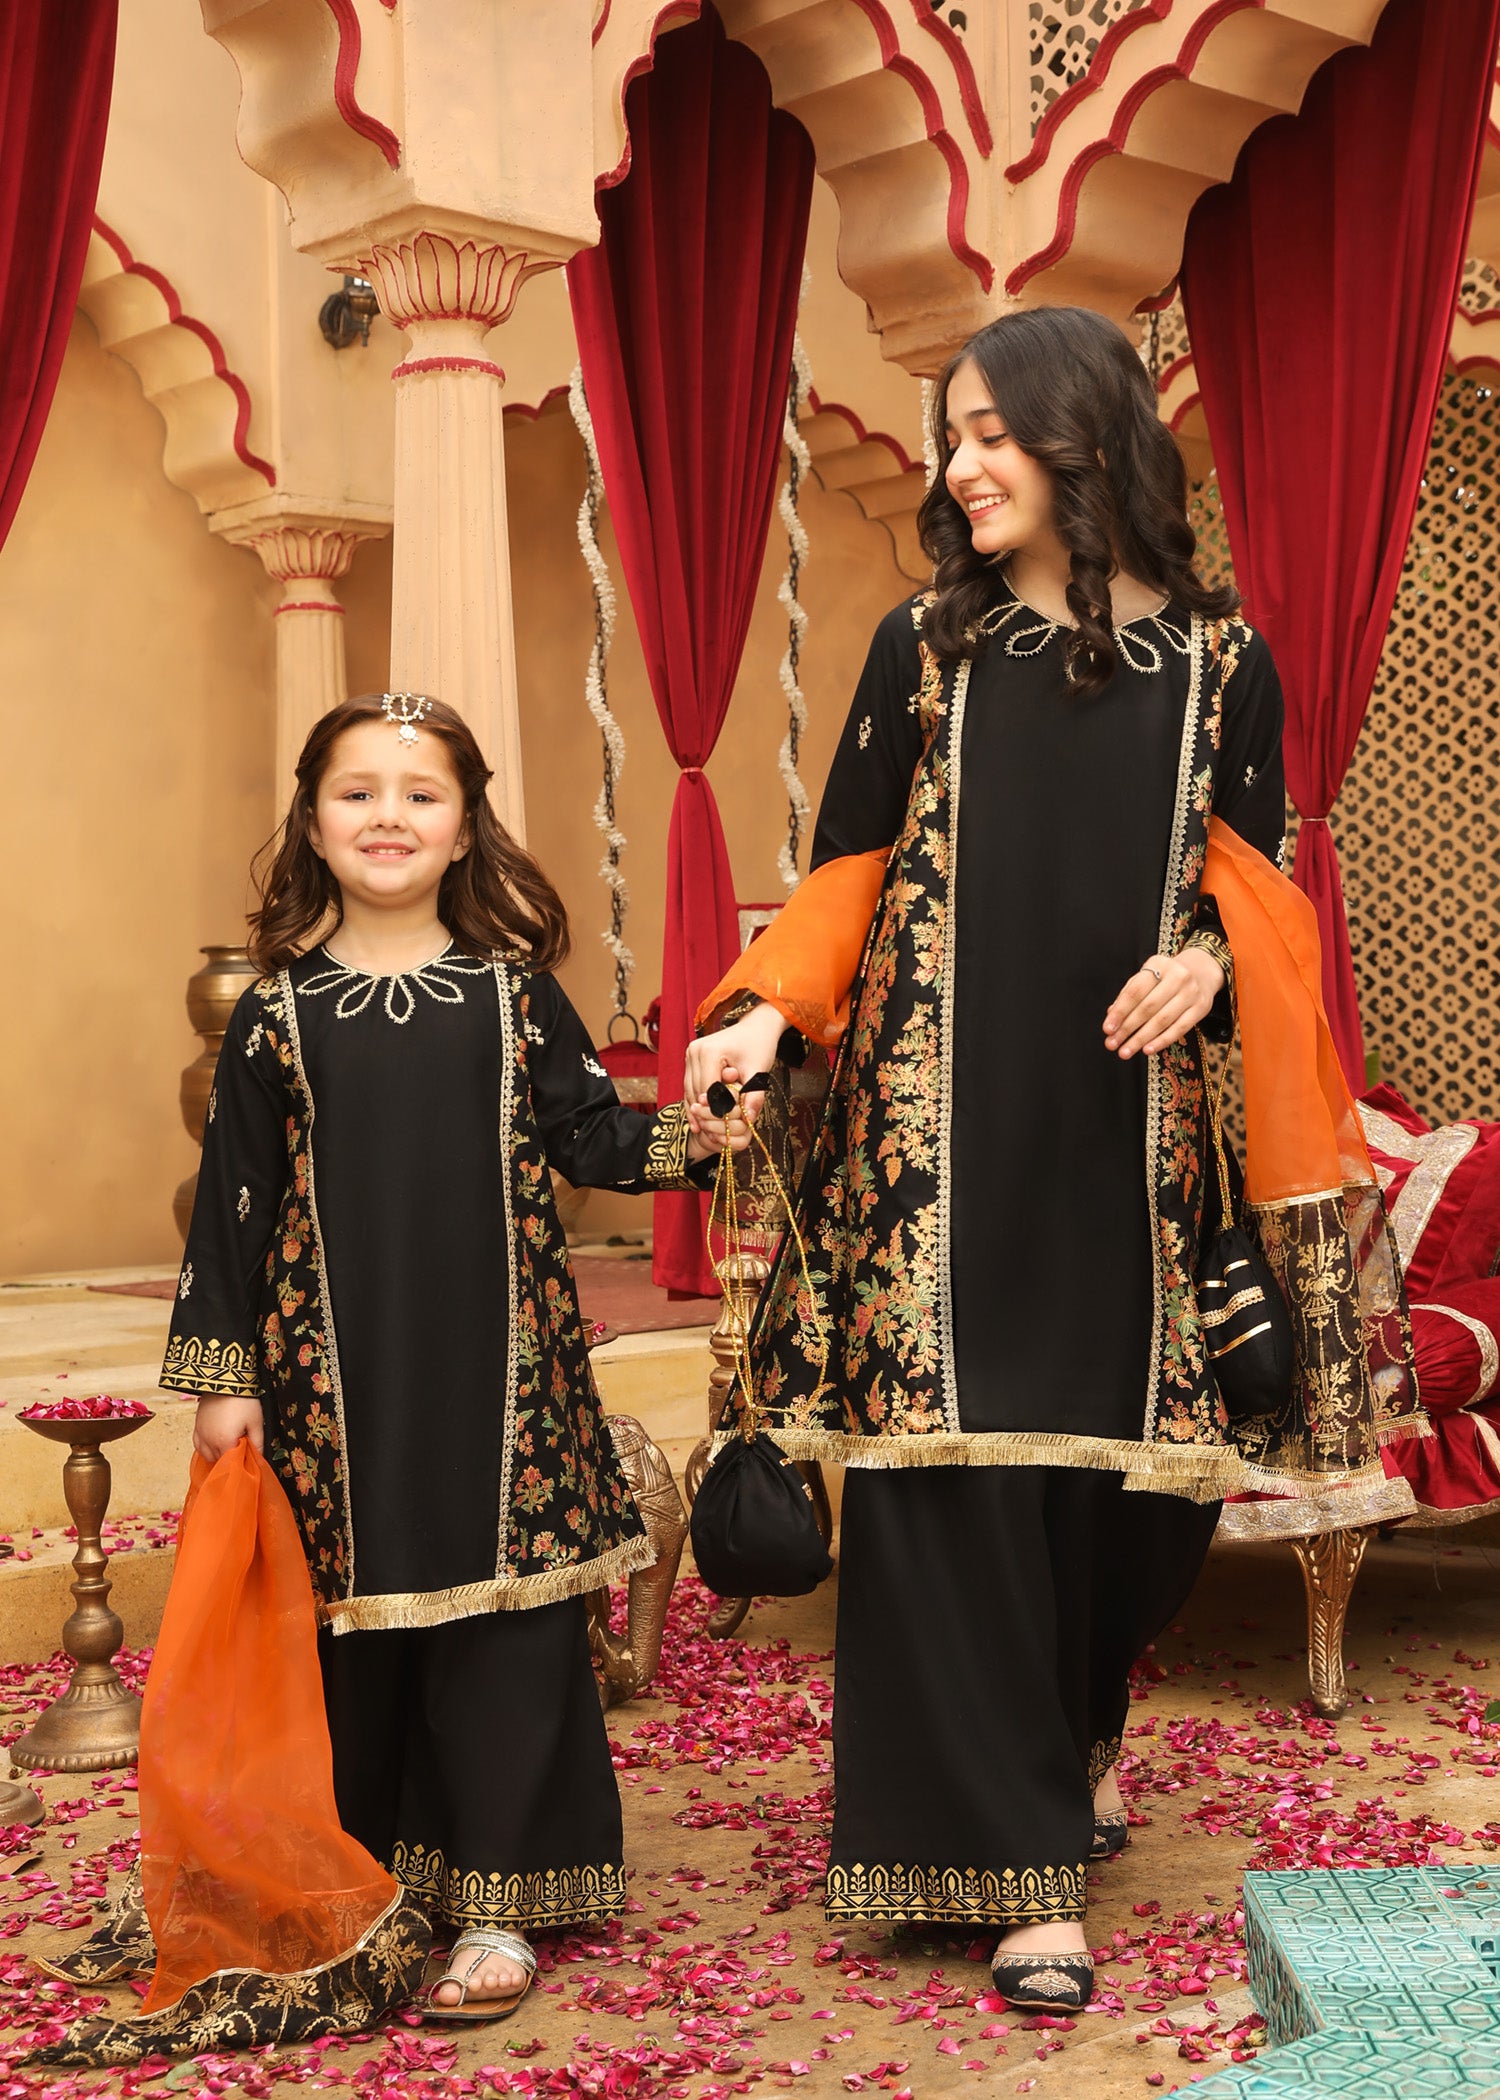 GIRLS DRESSES PAKISTANI LIB79 - Women's clothing Shop